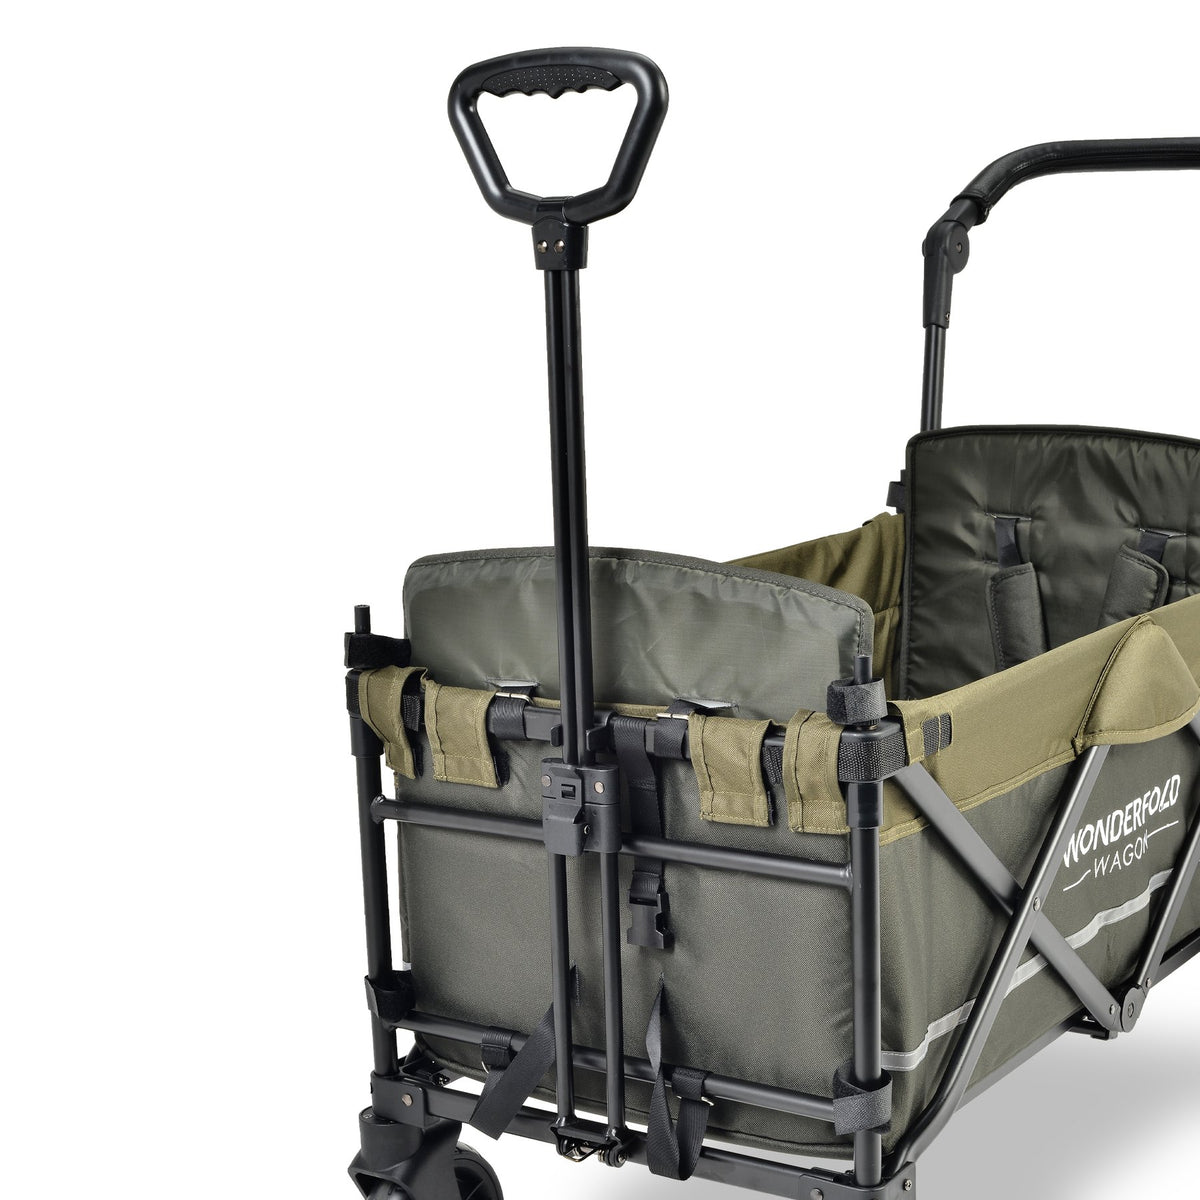 WonderFold Baby X2 Push/Pull 2-Passenger Double Stroller Wagon Green New